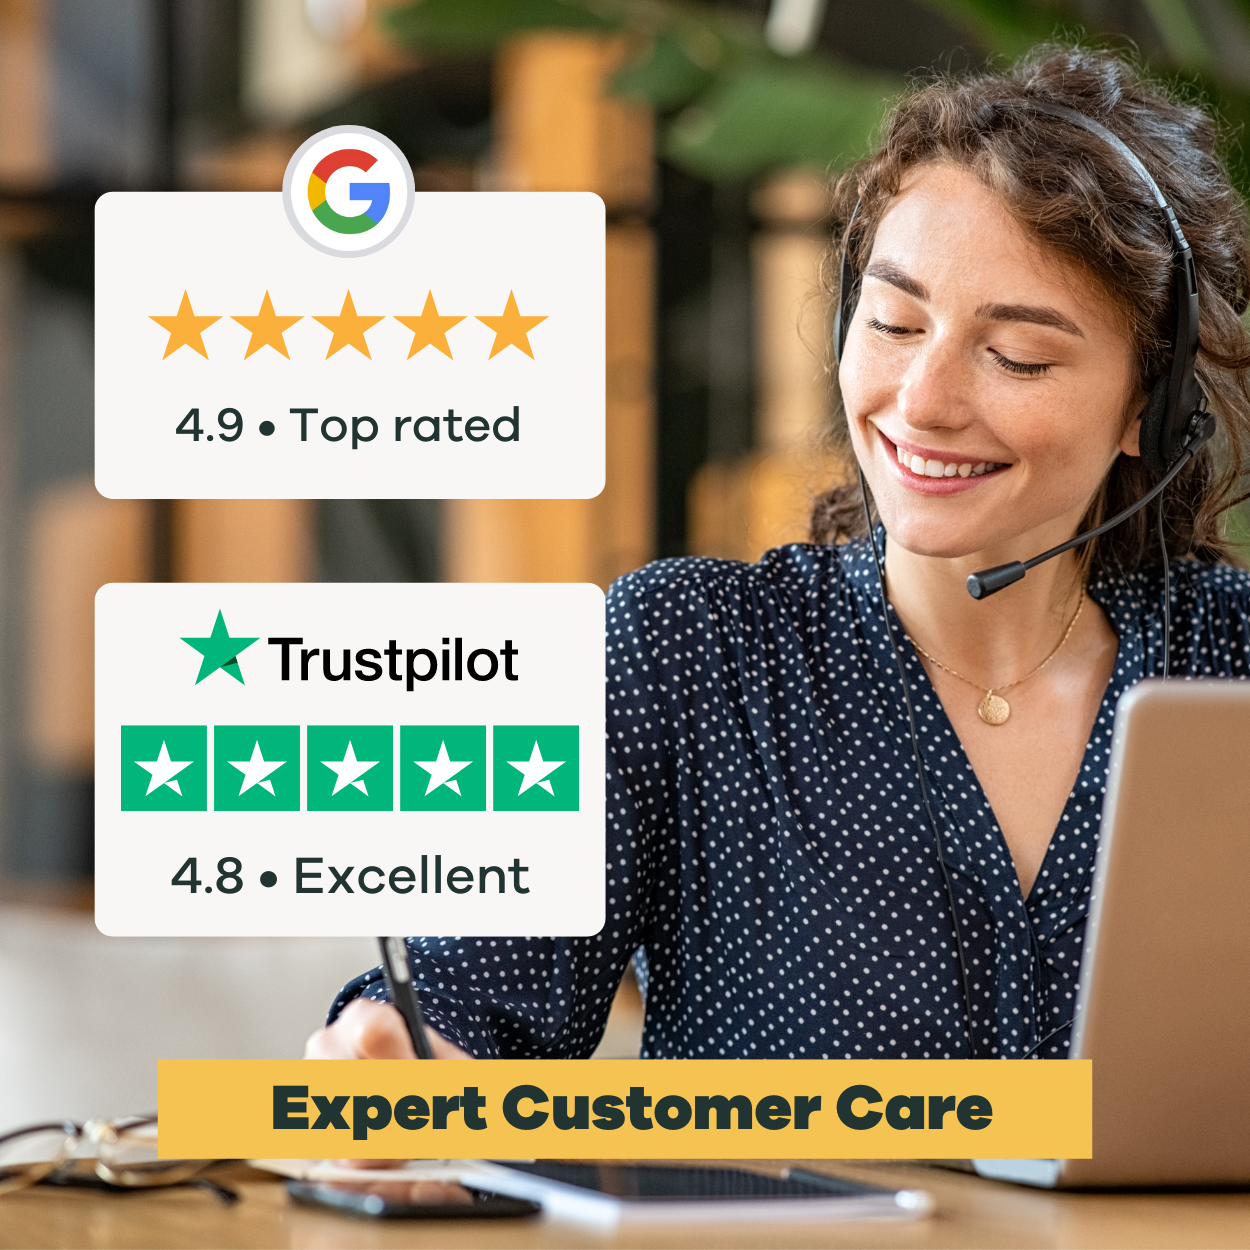 Expert Customer Care